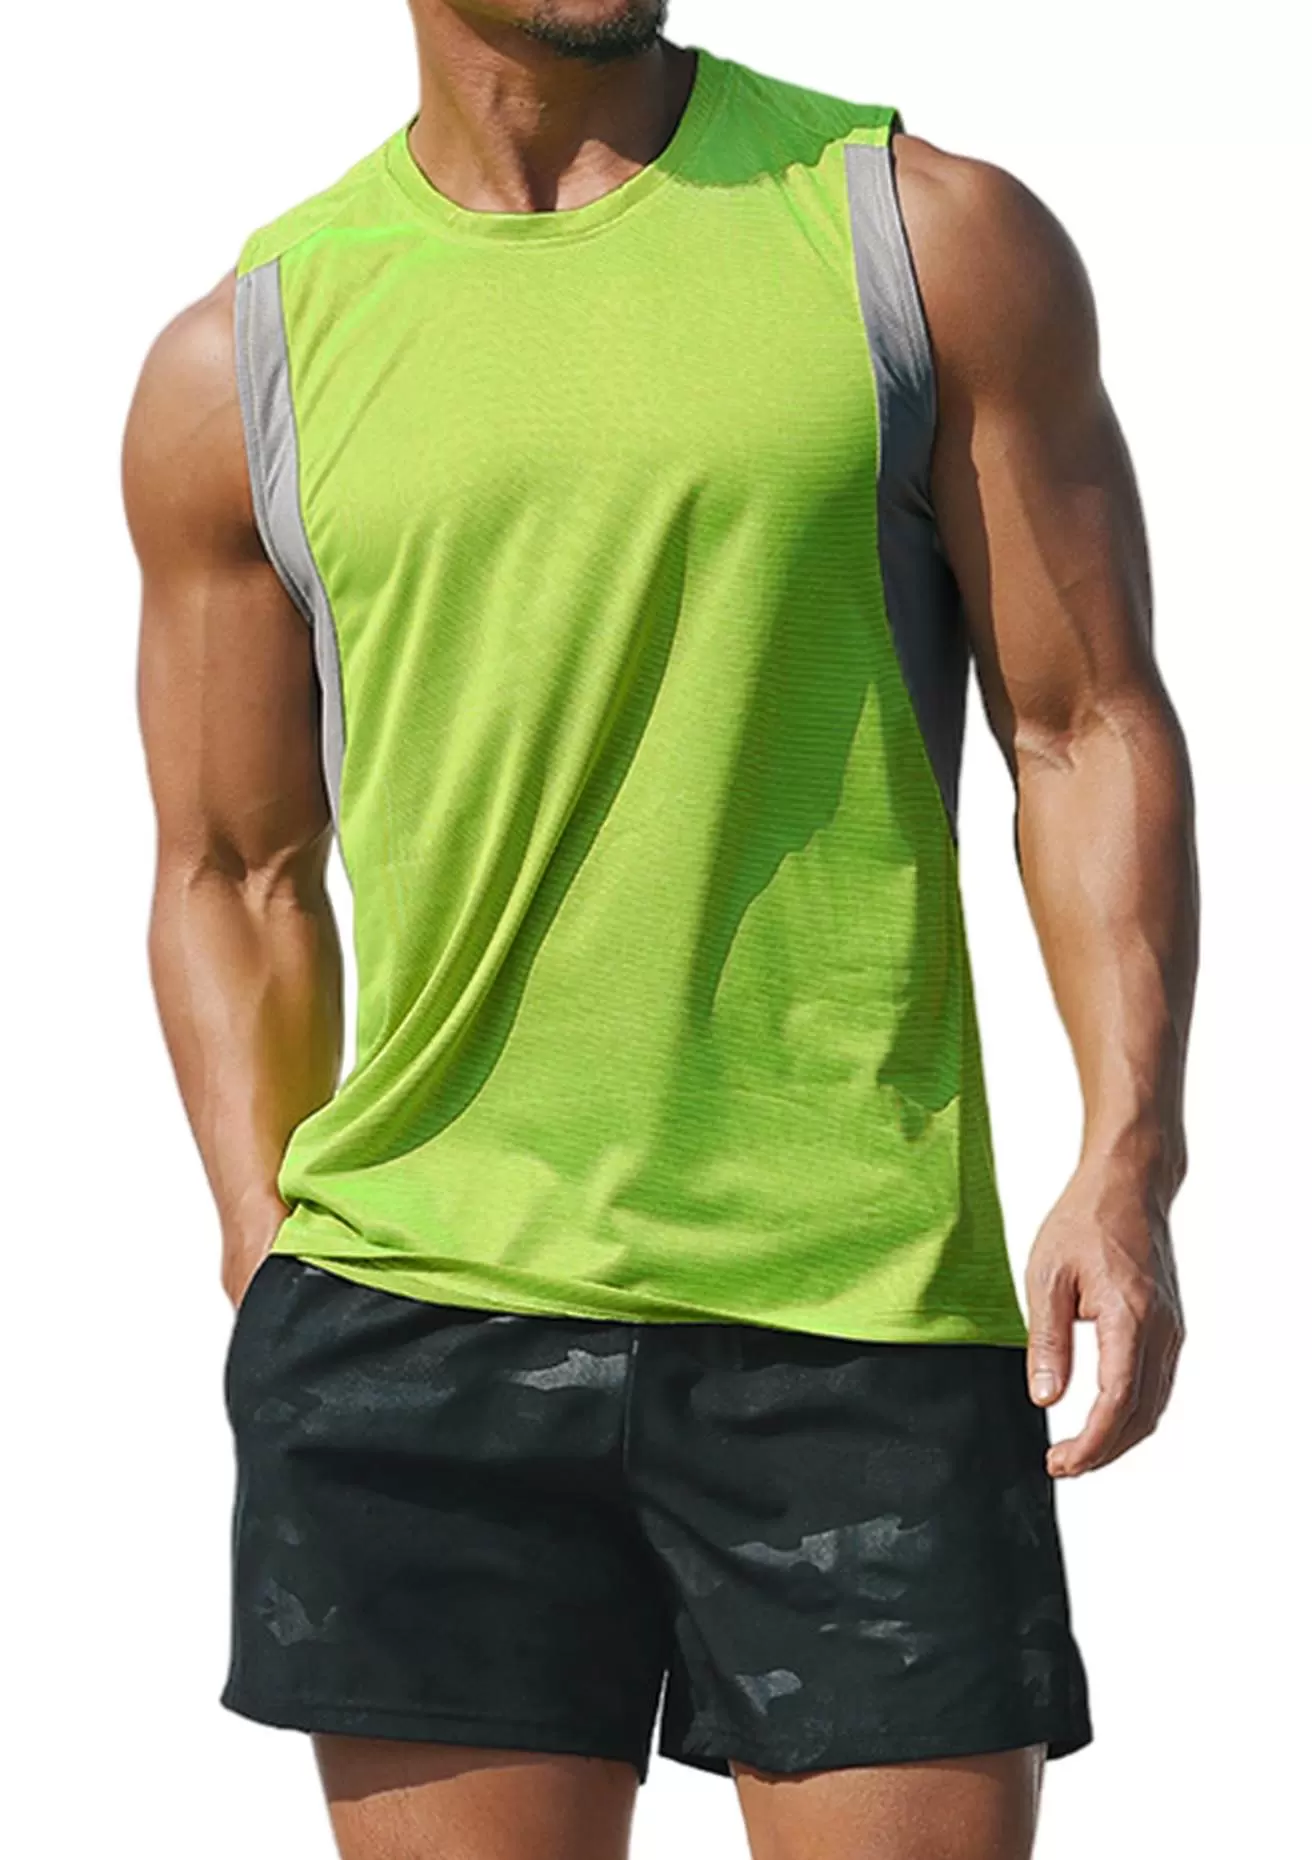 Manufacturer Wholesale Supplier Bangladesh Men Round Neck Tank Top Dry Fit Fitness Muscle Jersey Tee Workout Sleeveless T Shirt Vest Gym Running Sport Activewear